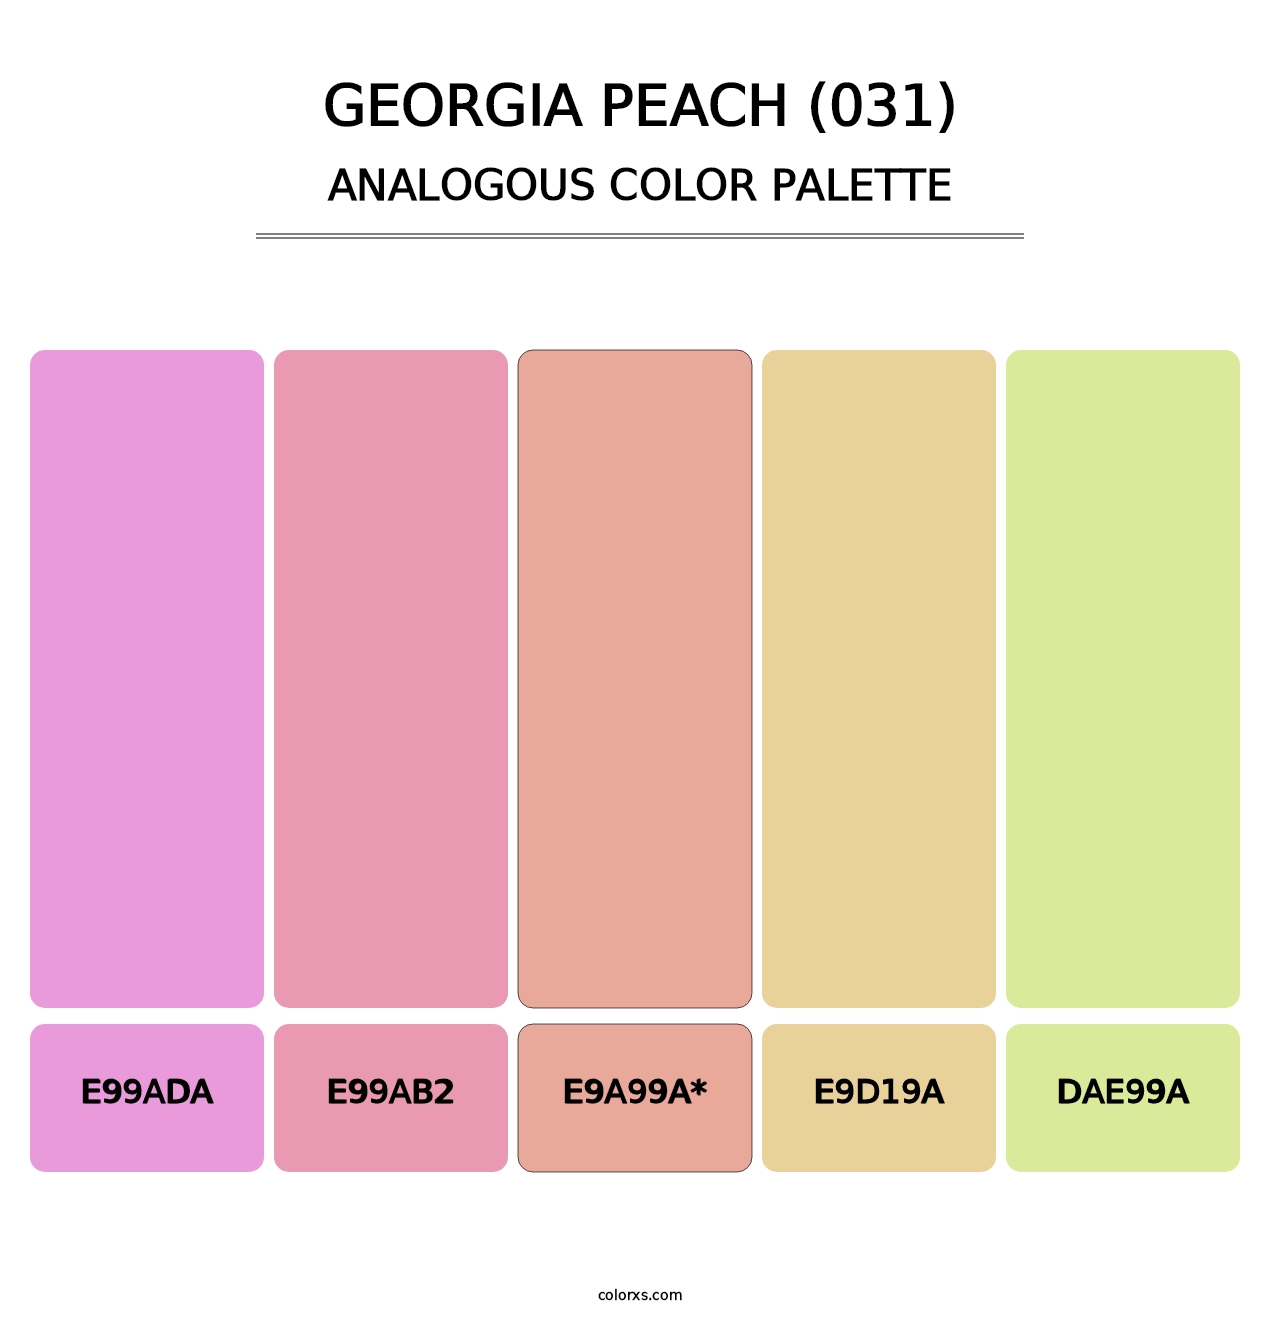 Georgia Peach (031) - Analogous Color Palette